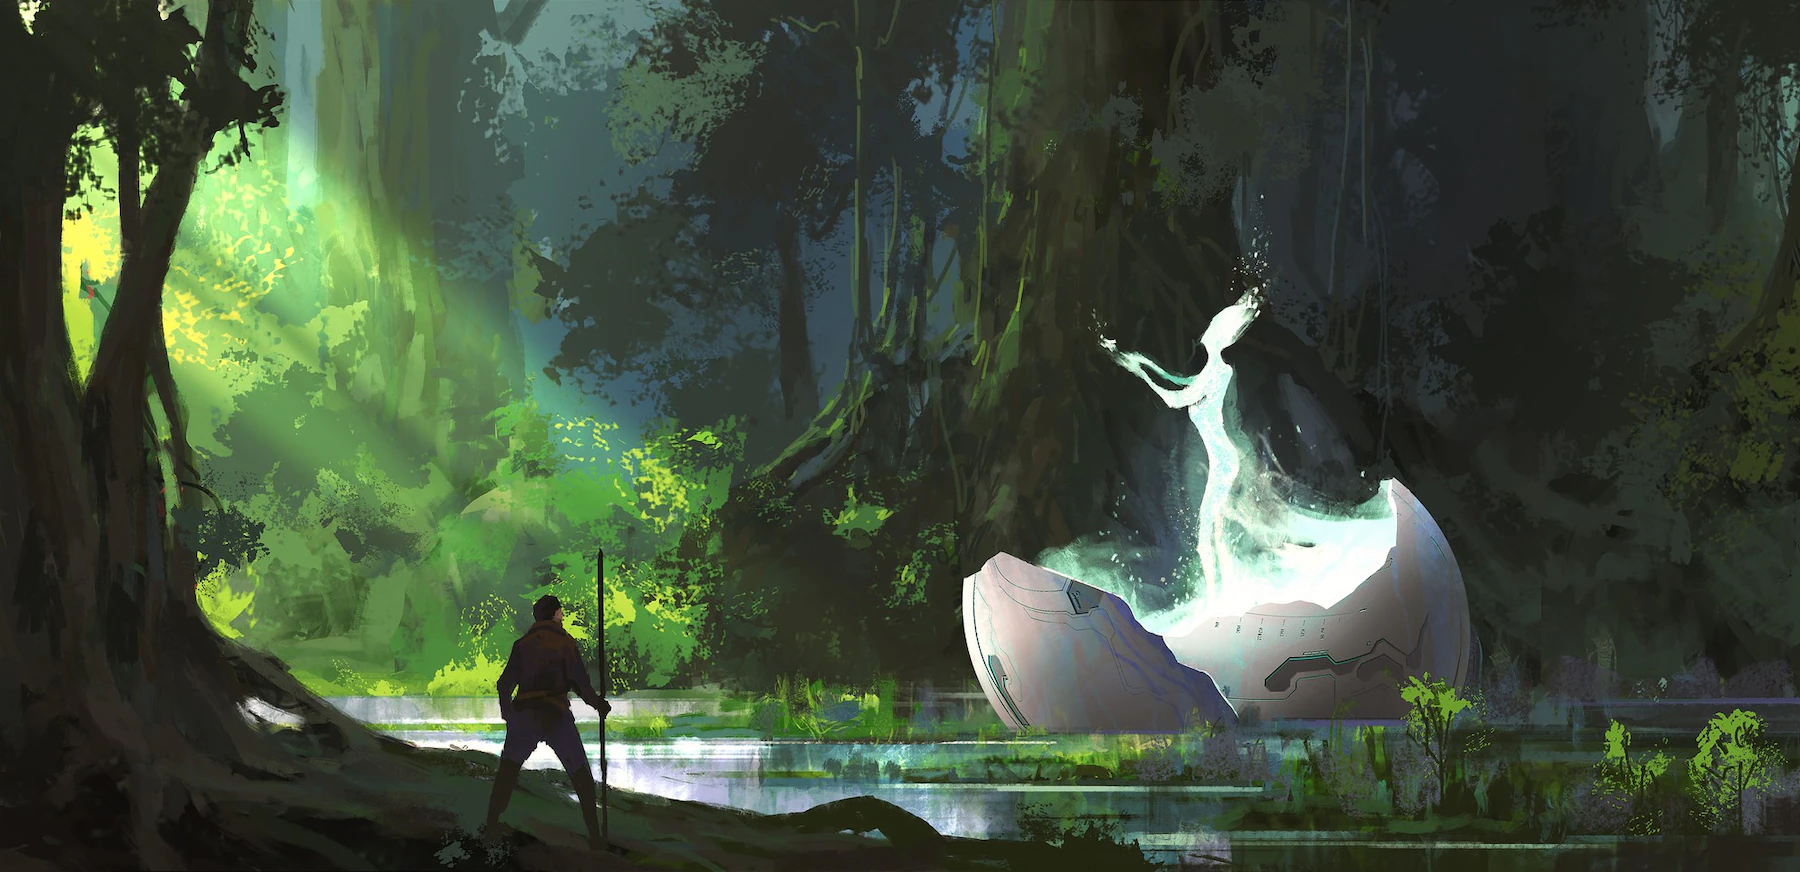 alien in the forest illustration 456031 20